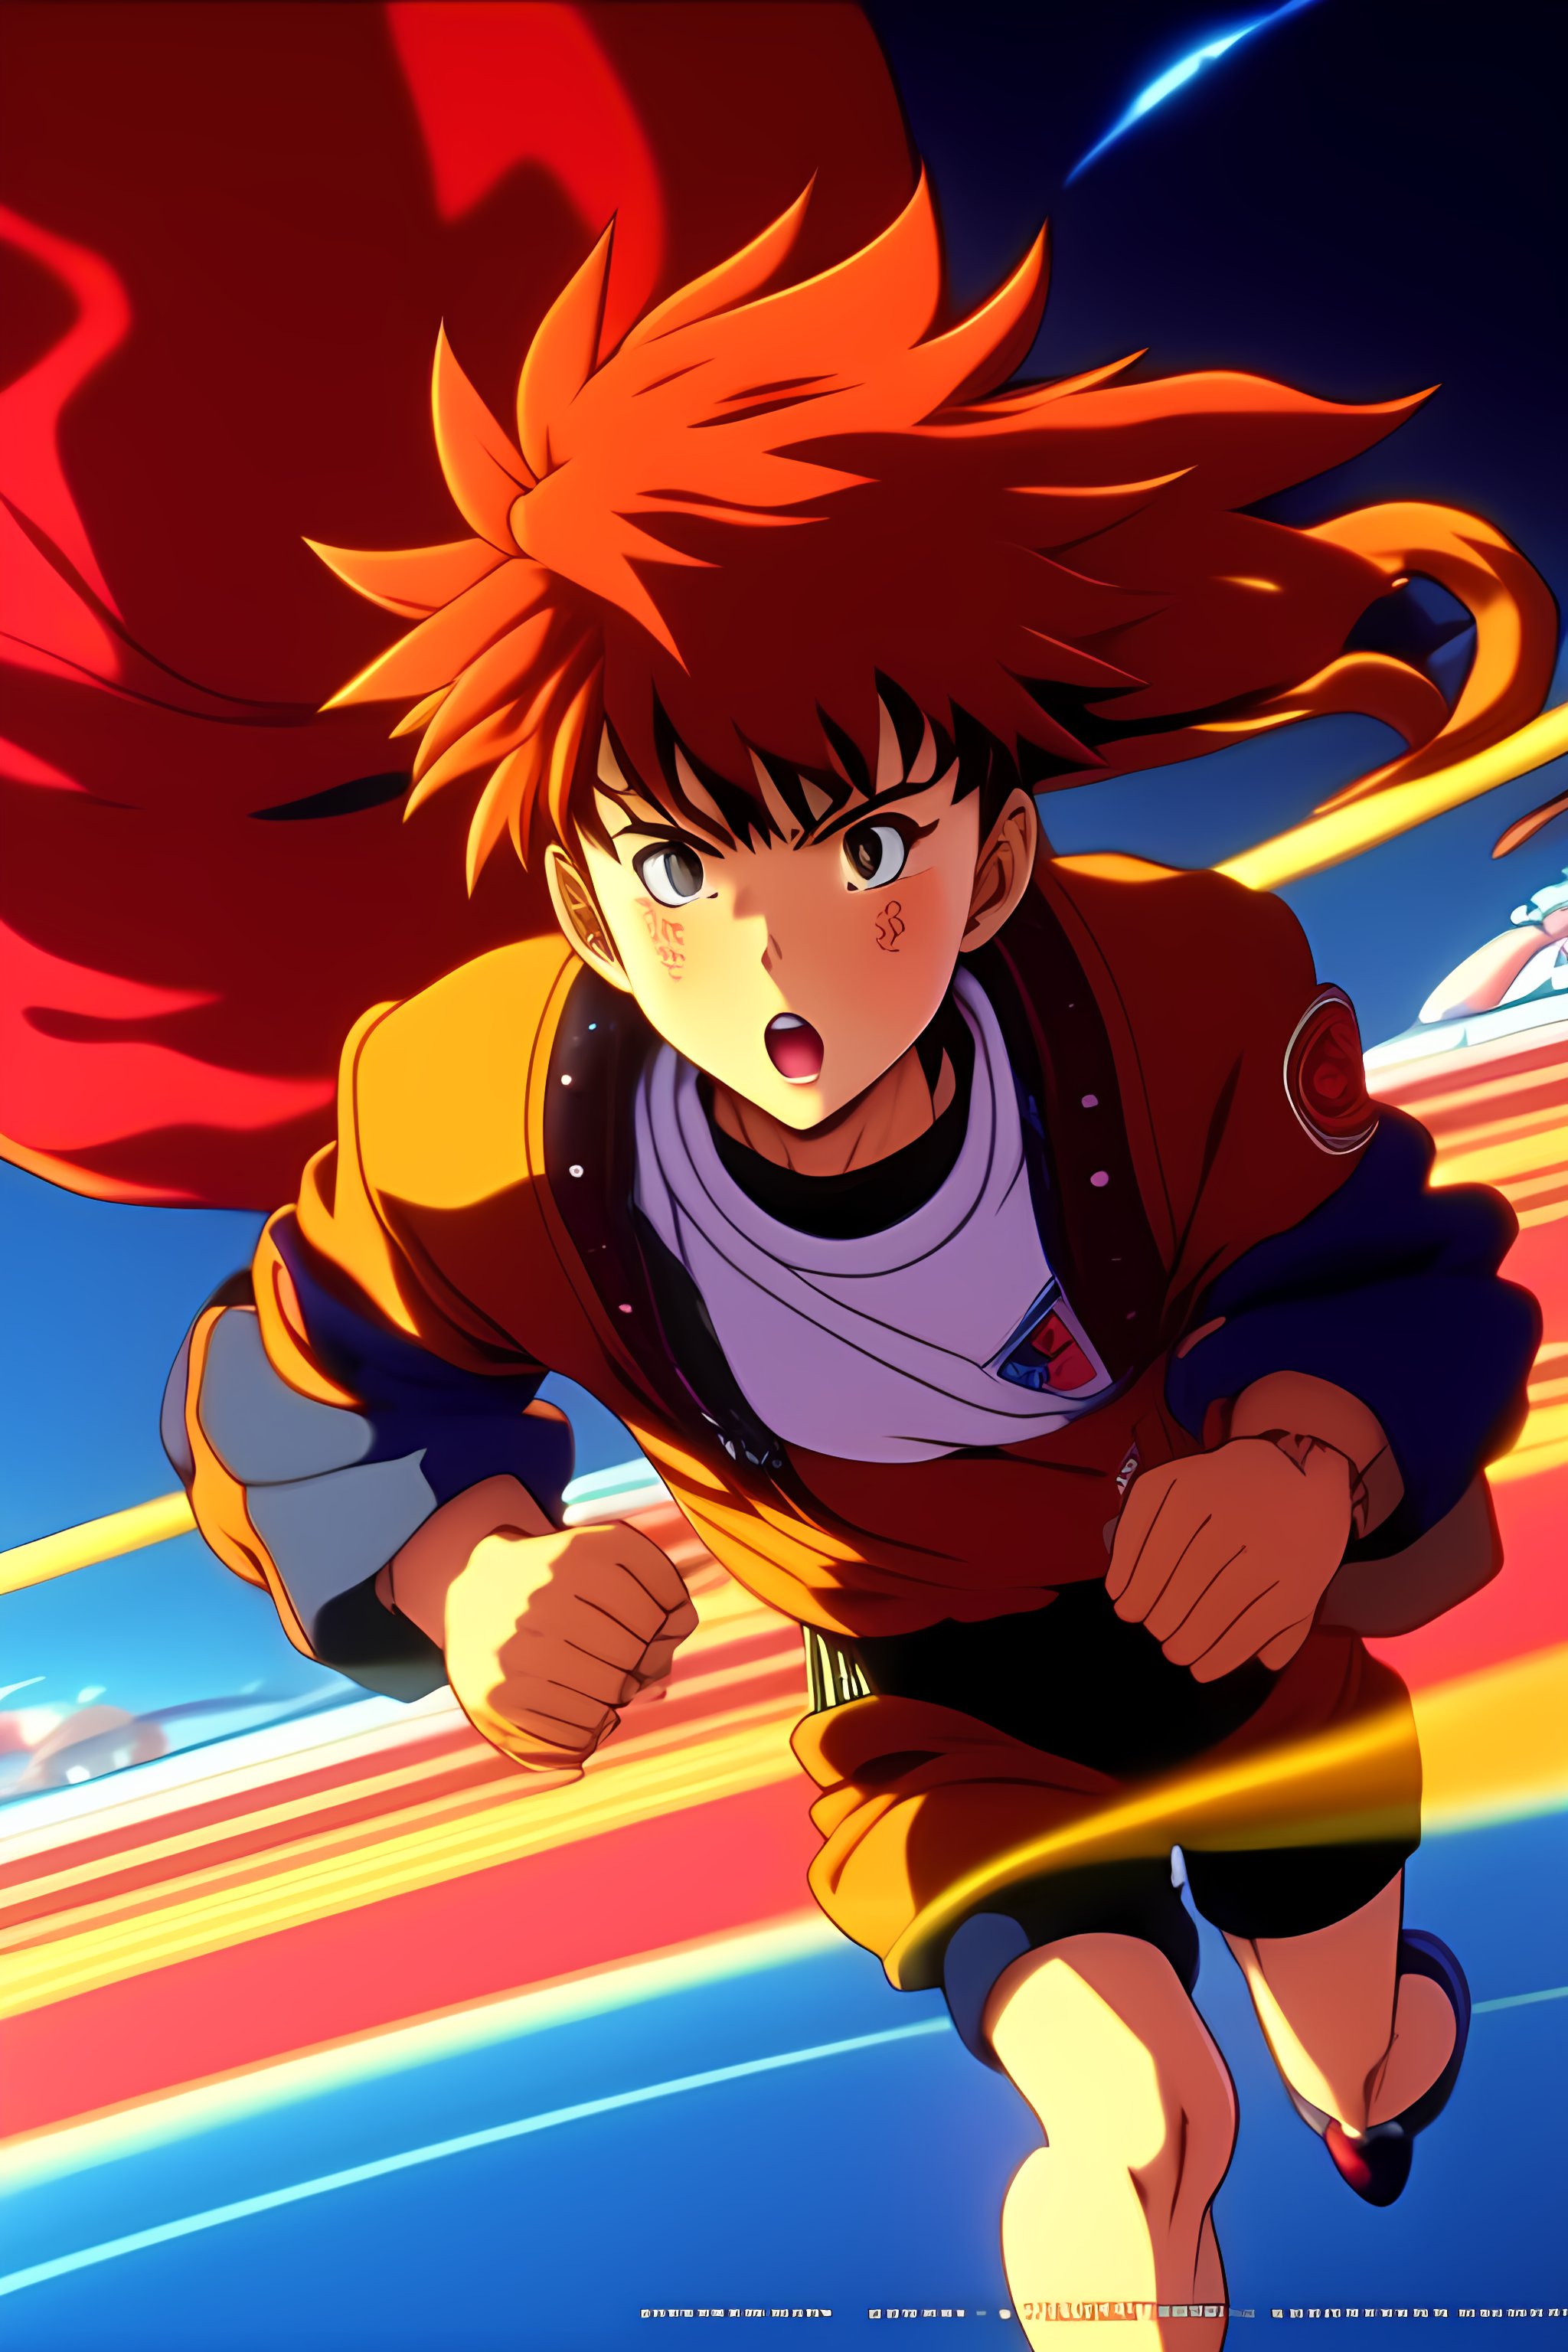 Lexica - Vintage anime screenshot from Akira, 90's anime aesthetic